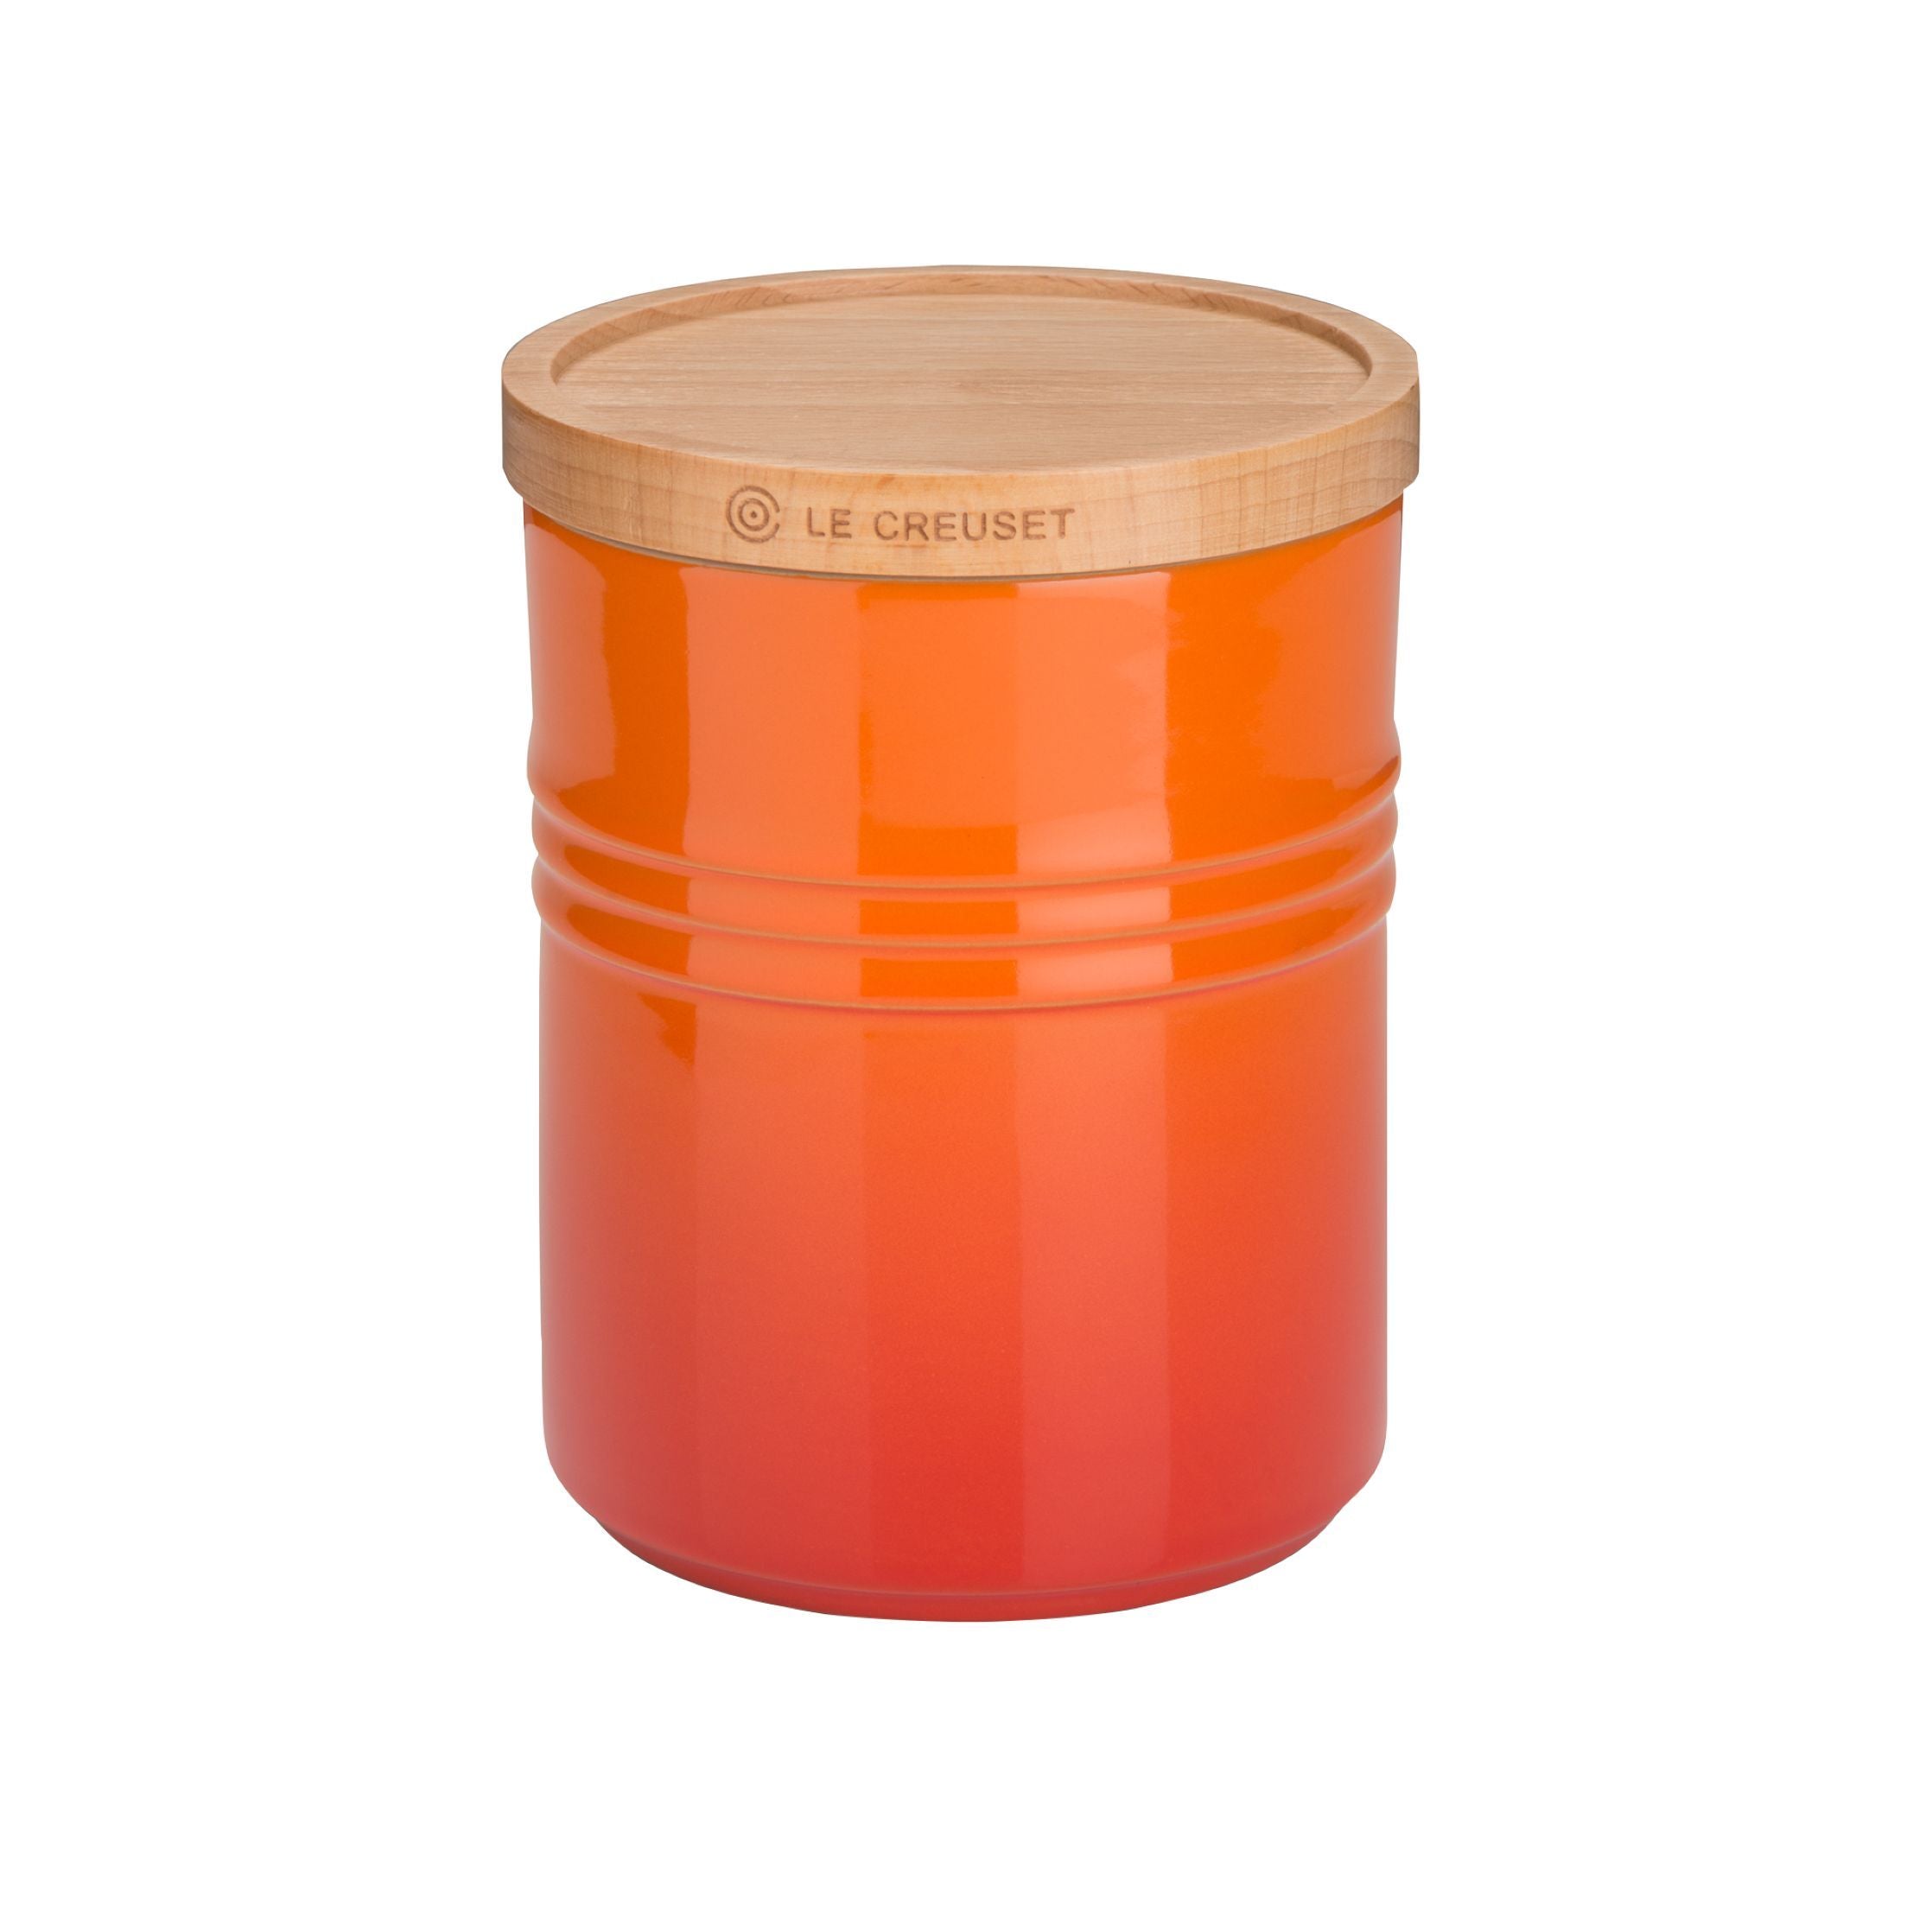 Le Creuset Storage Jar 540 Ml, Oven Red